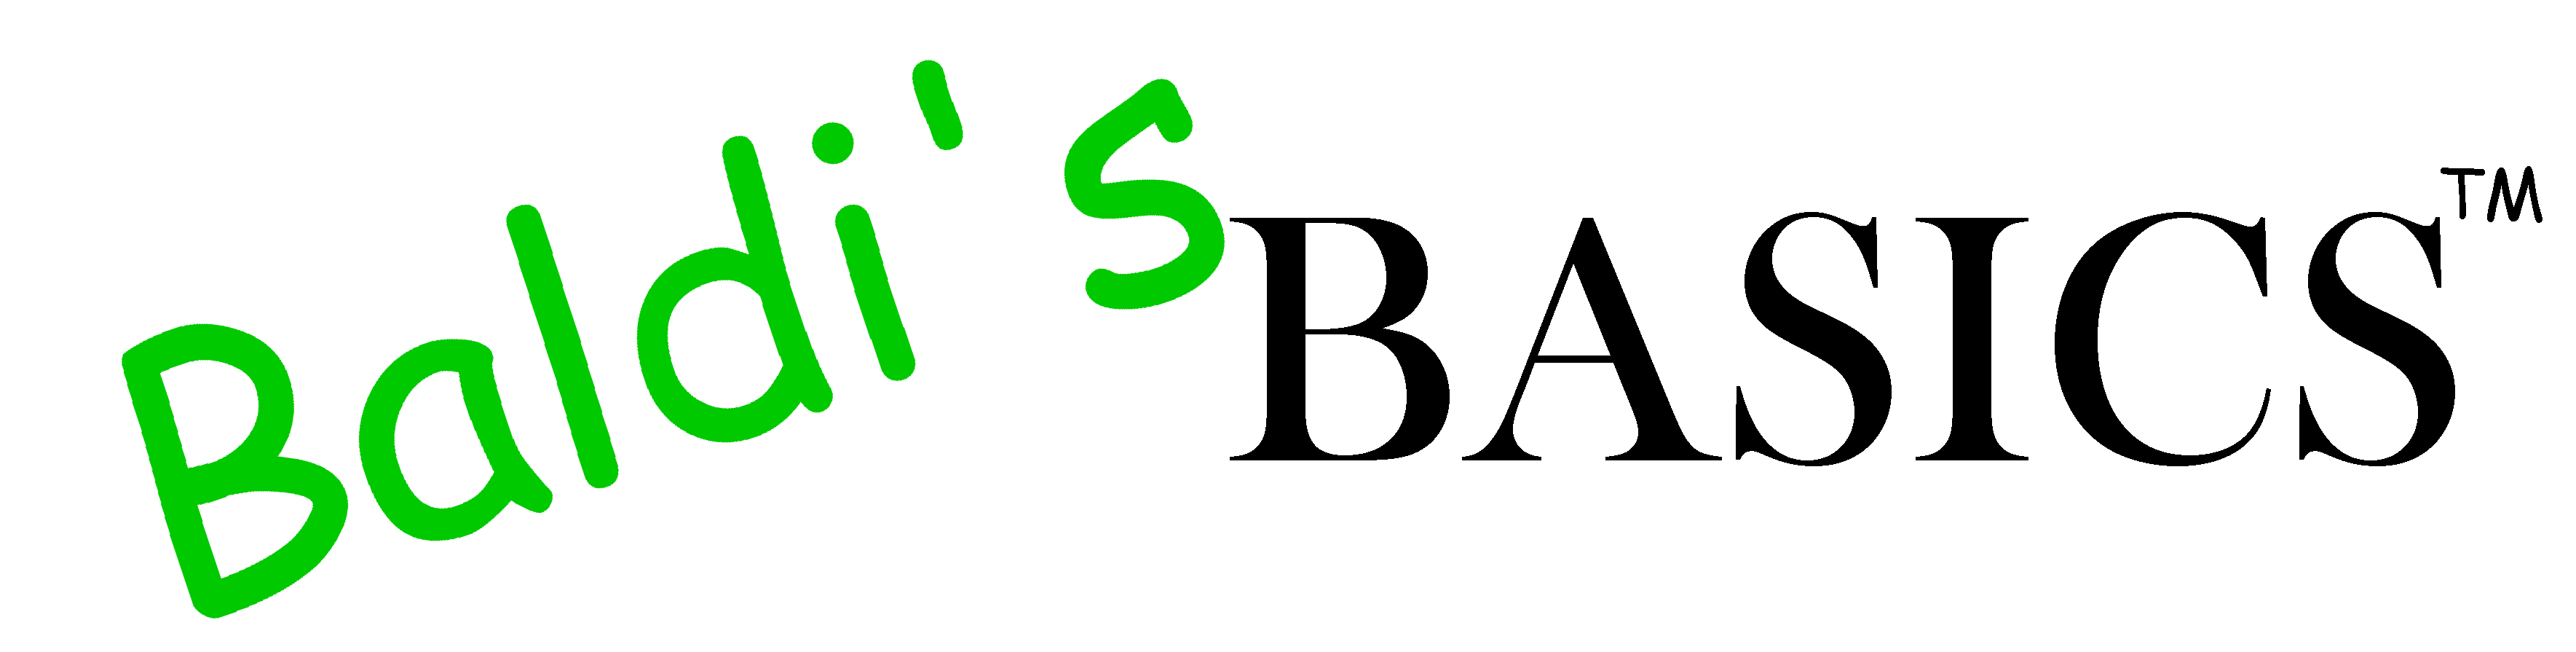 БАЛДИ бейсикс. БАЛДИ логотип. Baldi Basics logo. Baldi's Basics in Education and Learning логотип.